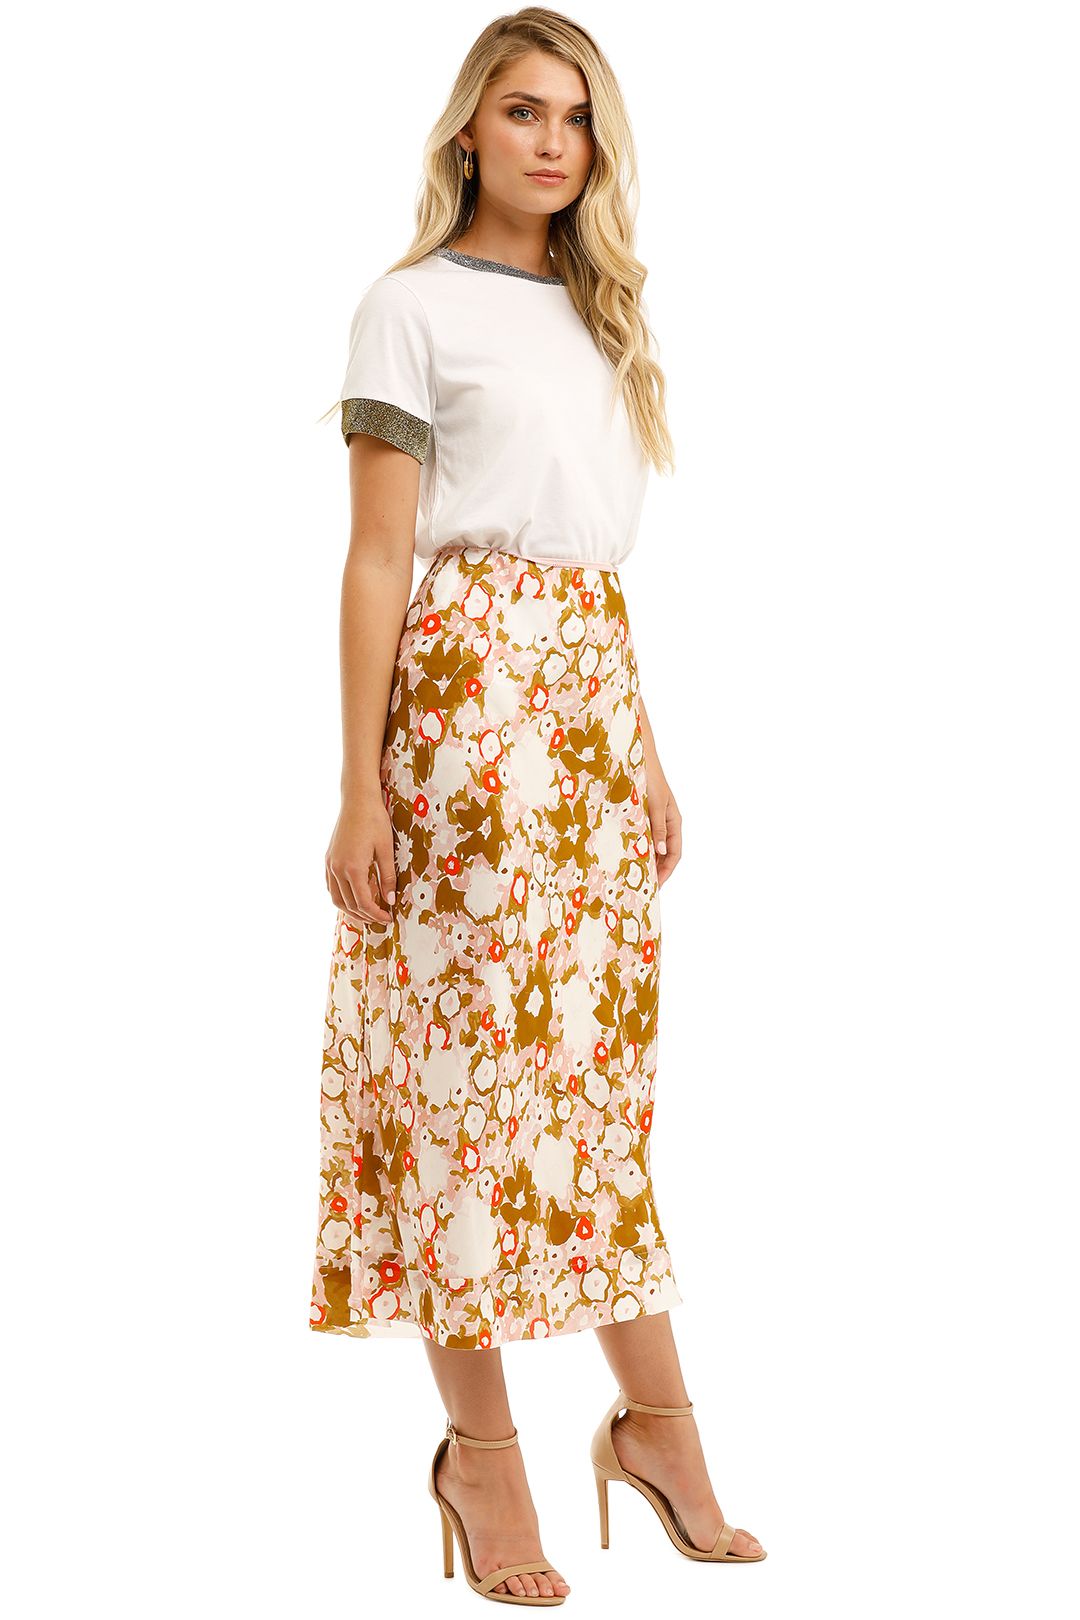 Lee-Mathews-Bella-Silk-Satin-Skirt-Monet-Floral-Side